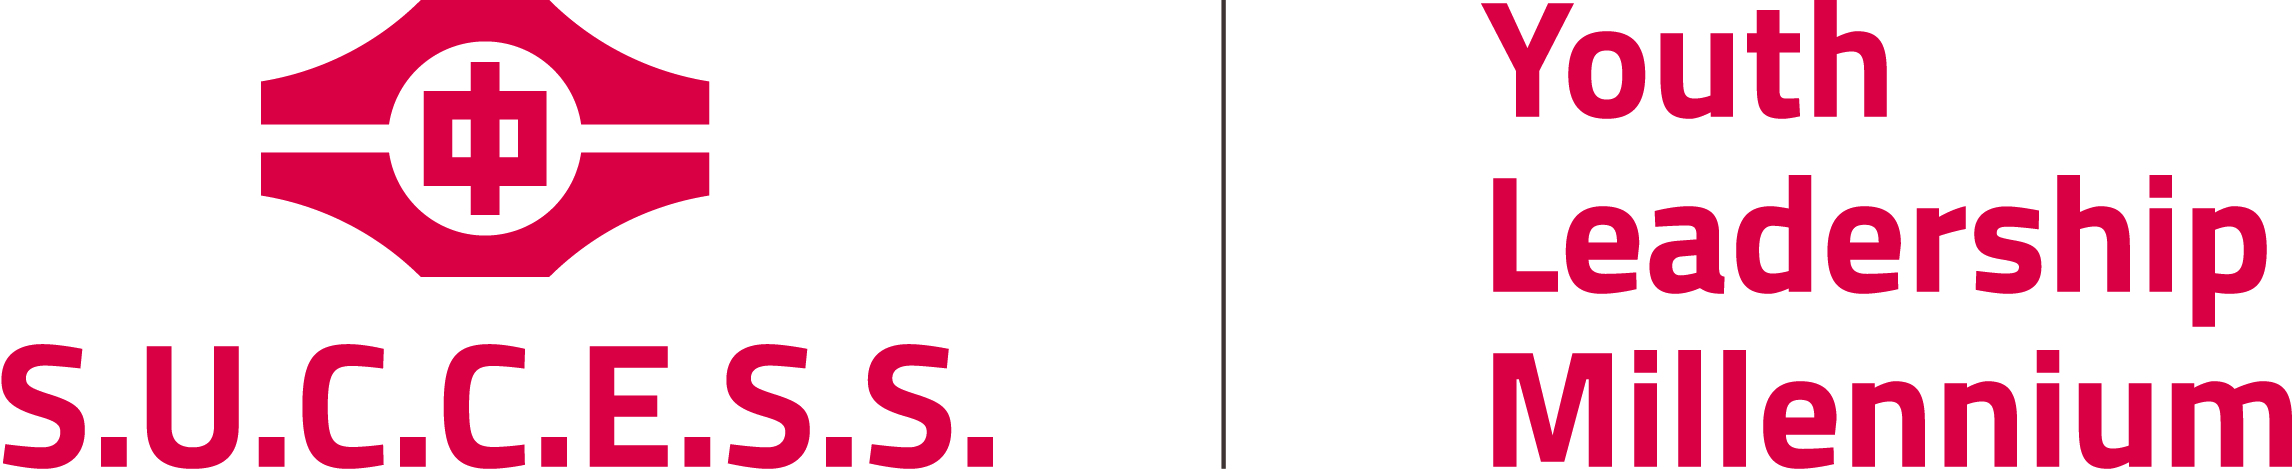 S.U.C.C.E.S.S YLM Logo